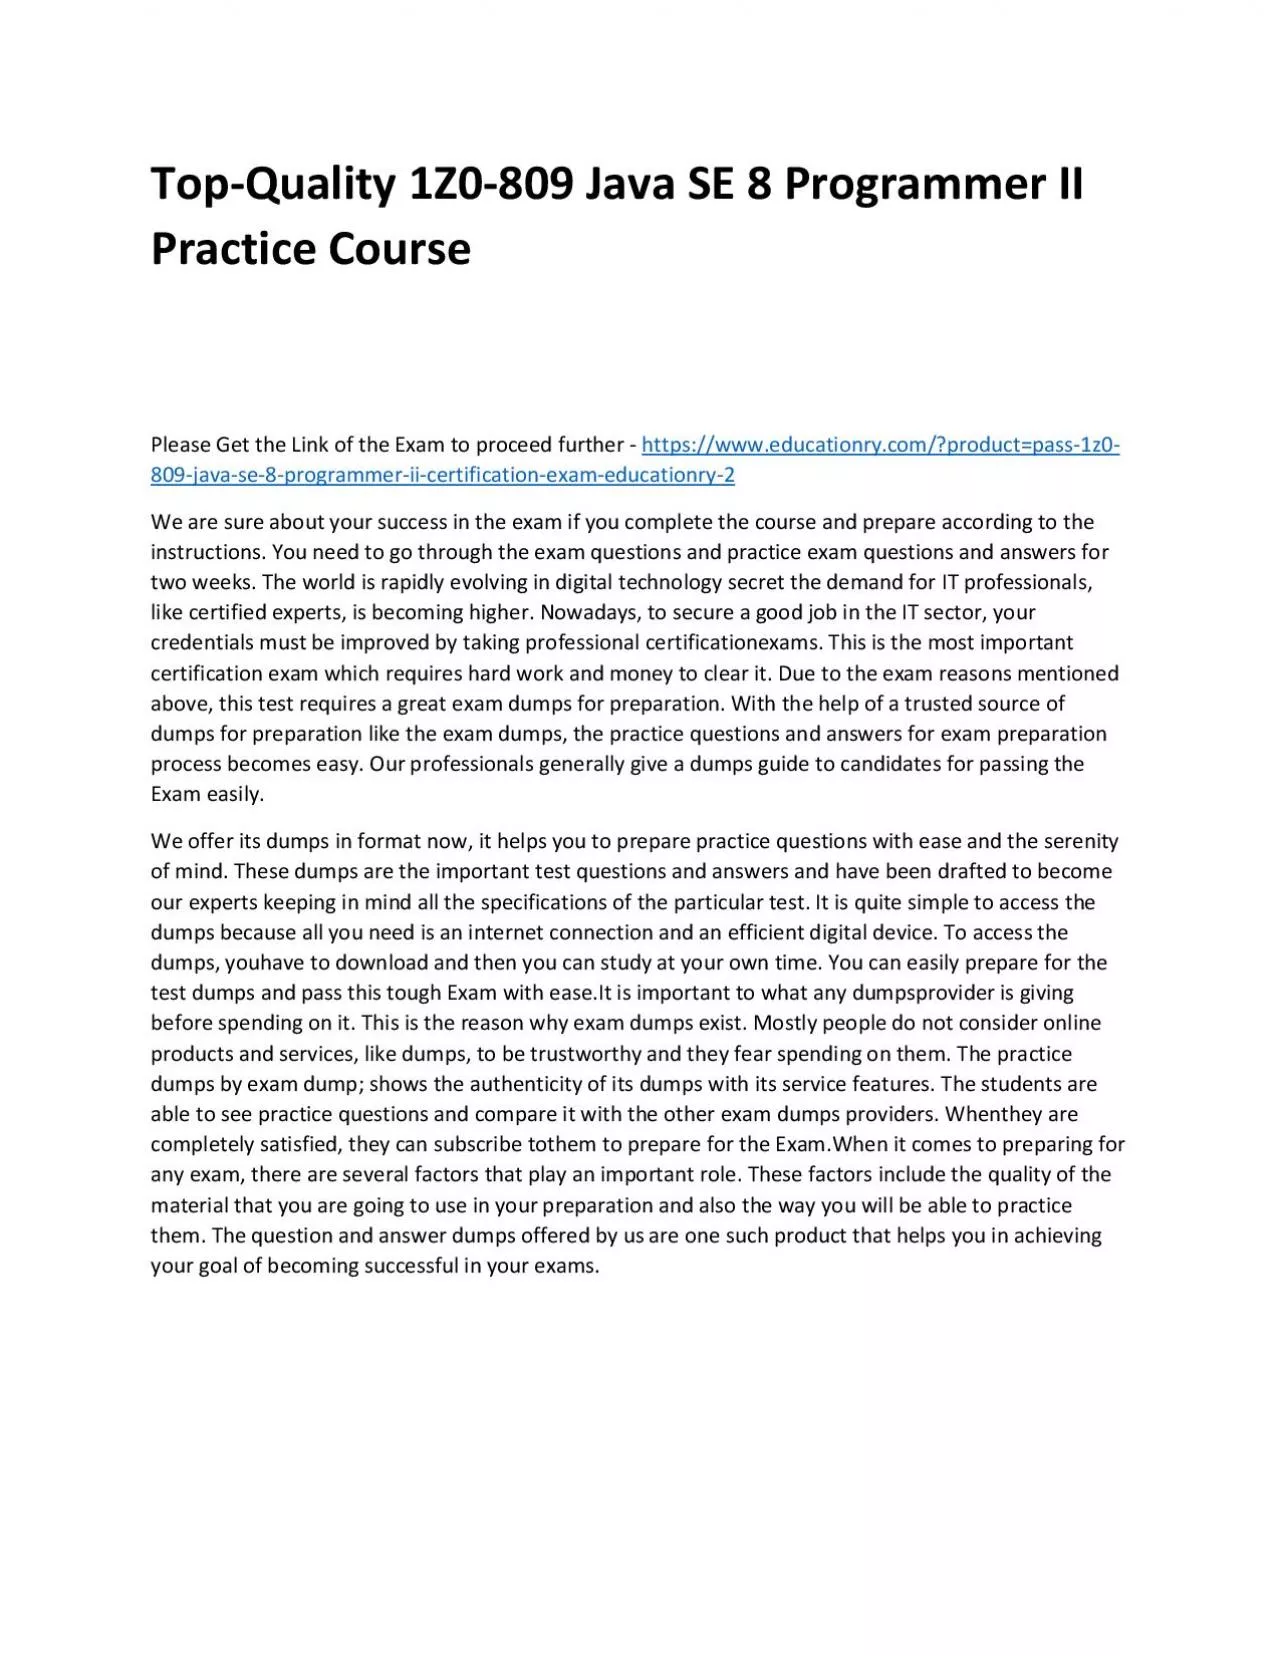 Top-Quality 1Z0-809 Java SE 8 Programmer II Practice Course